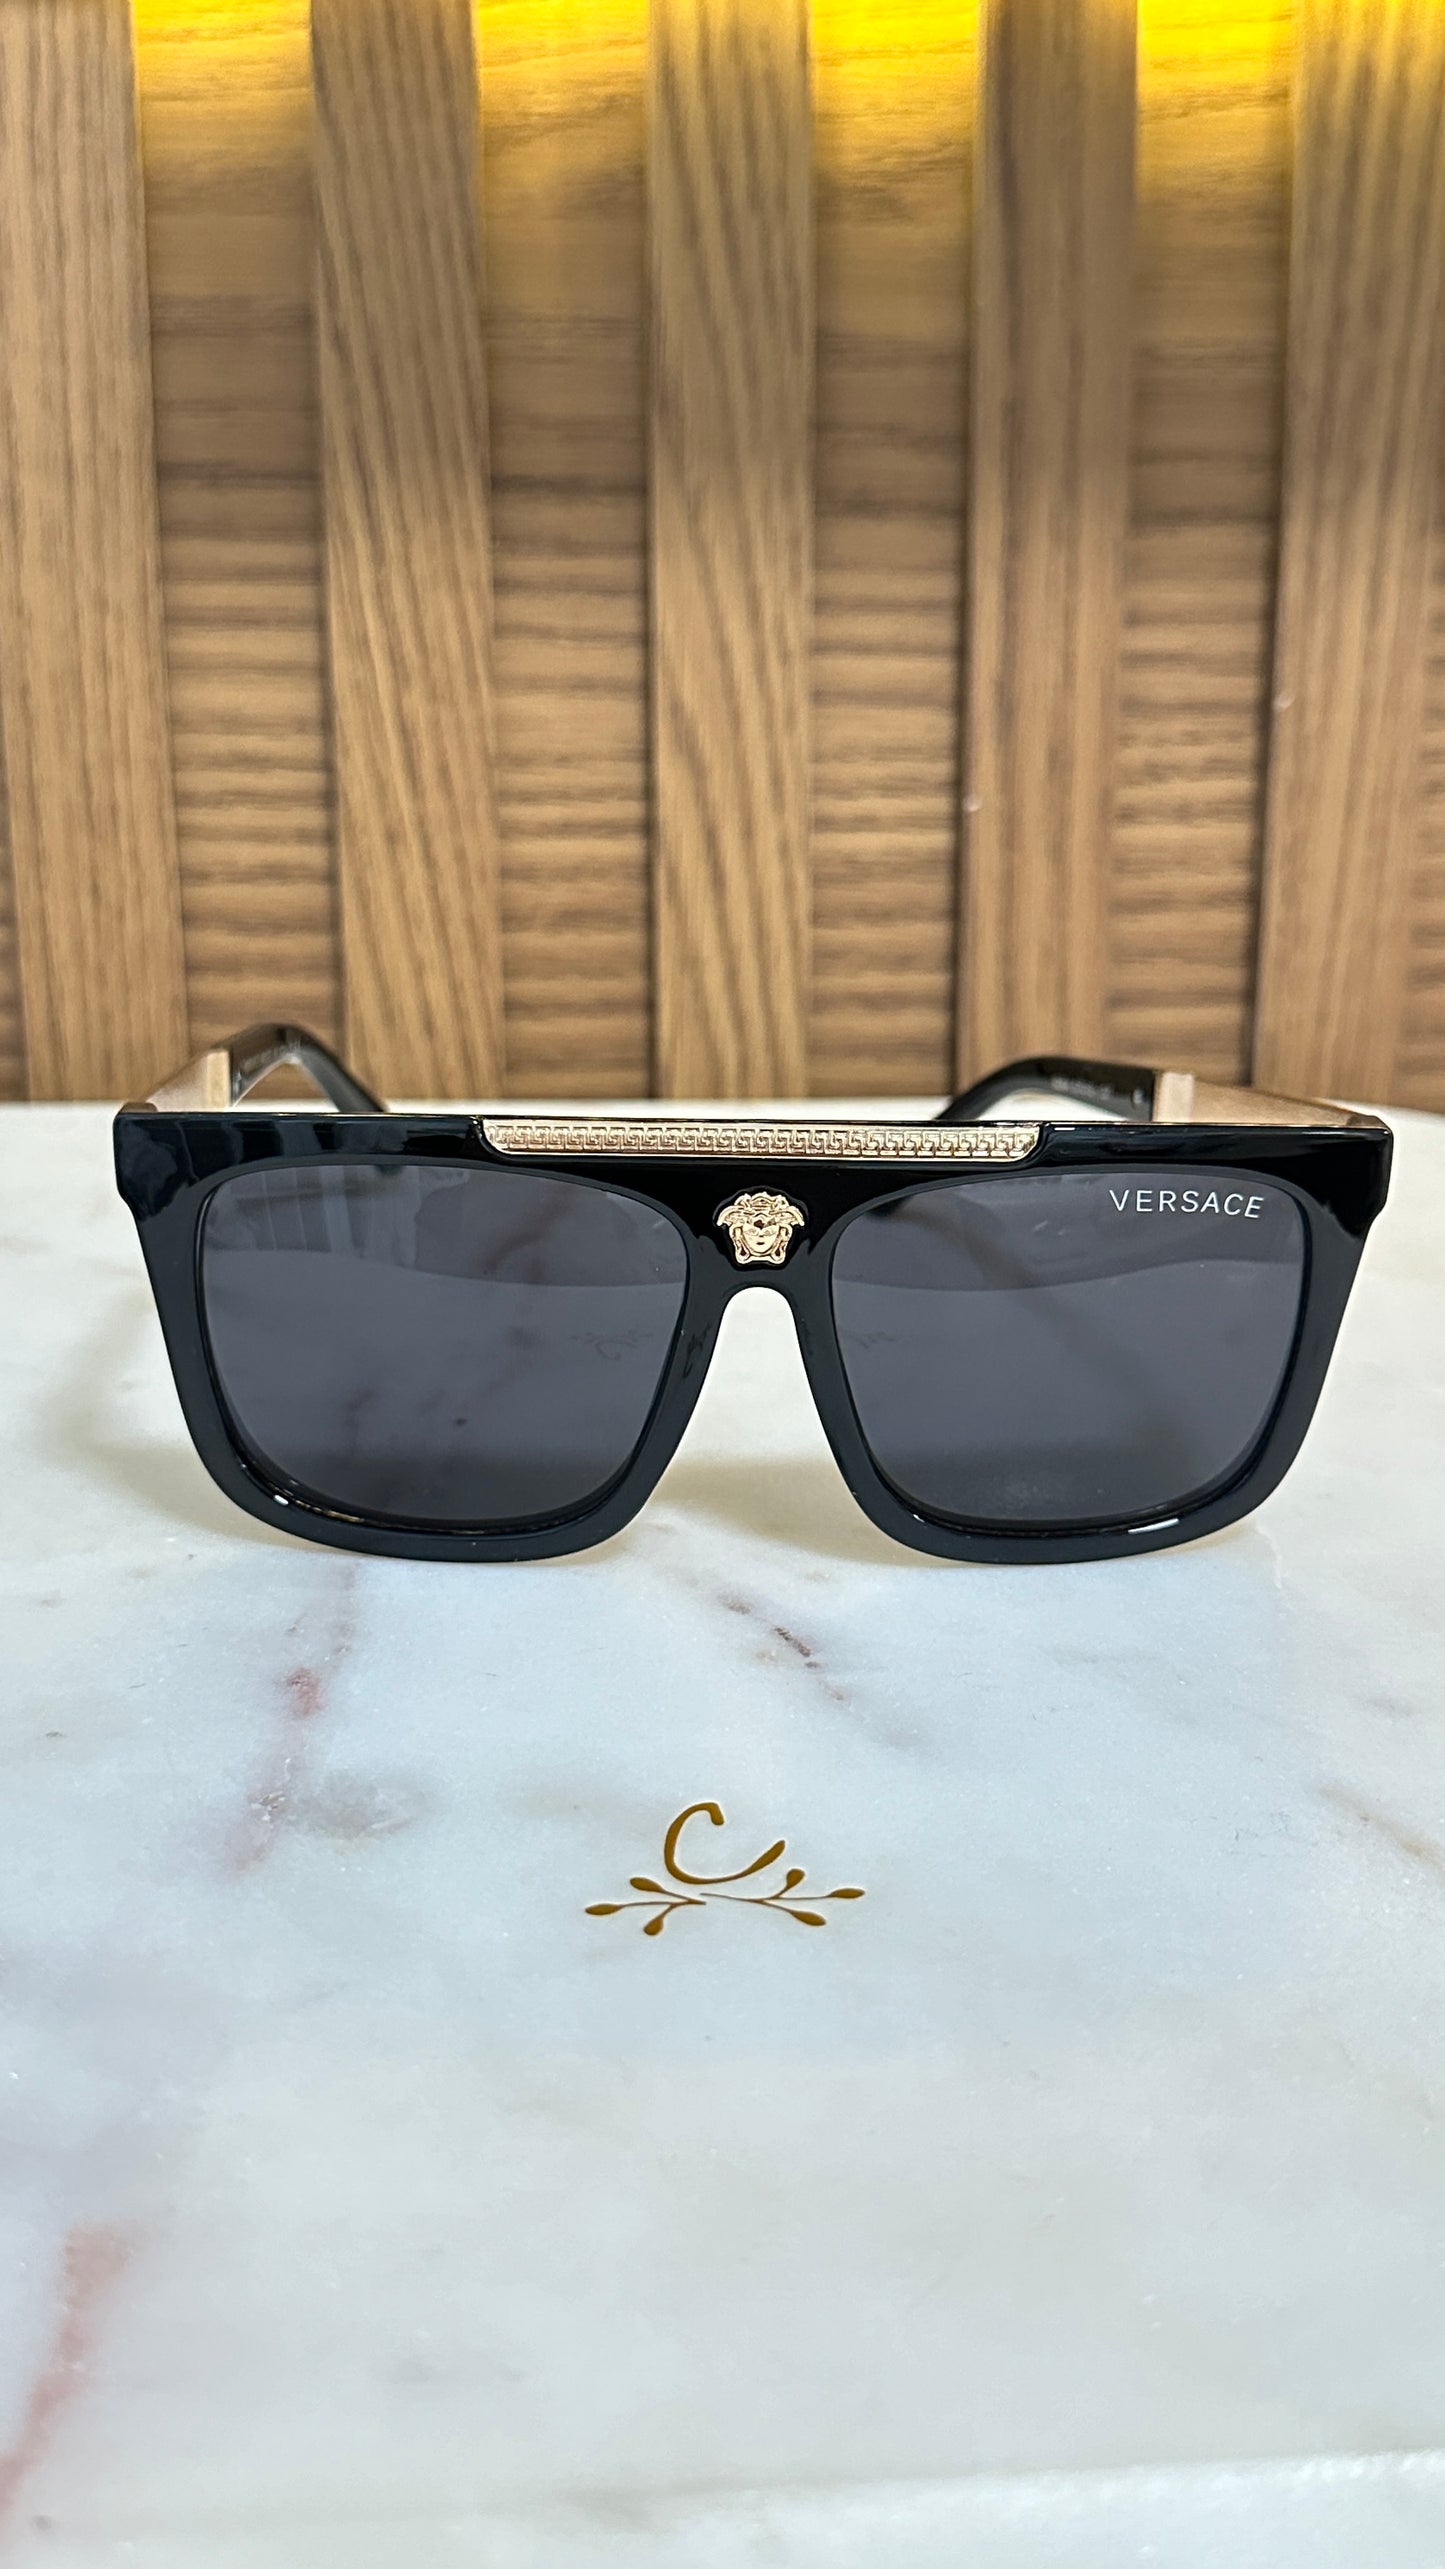 Sunglasses Ref 158